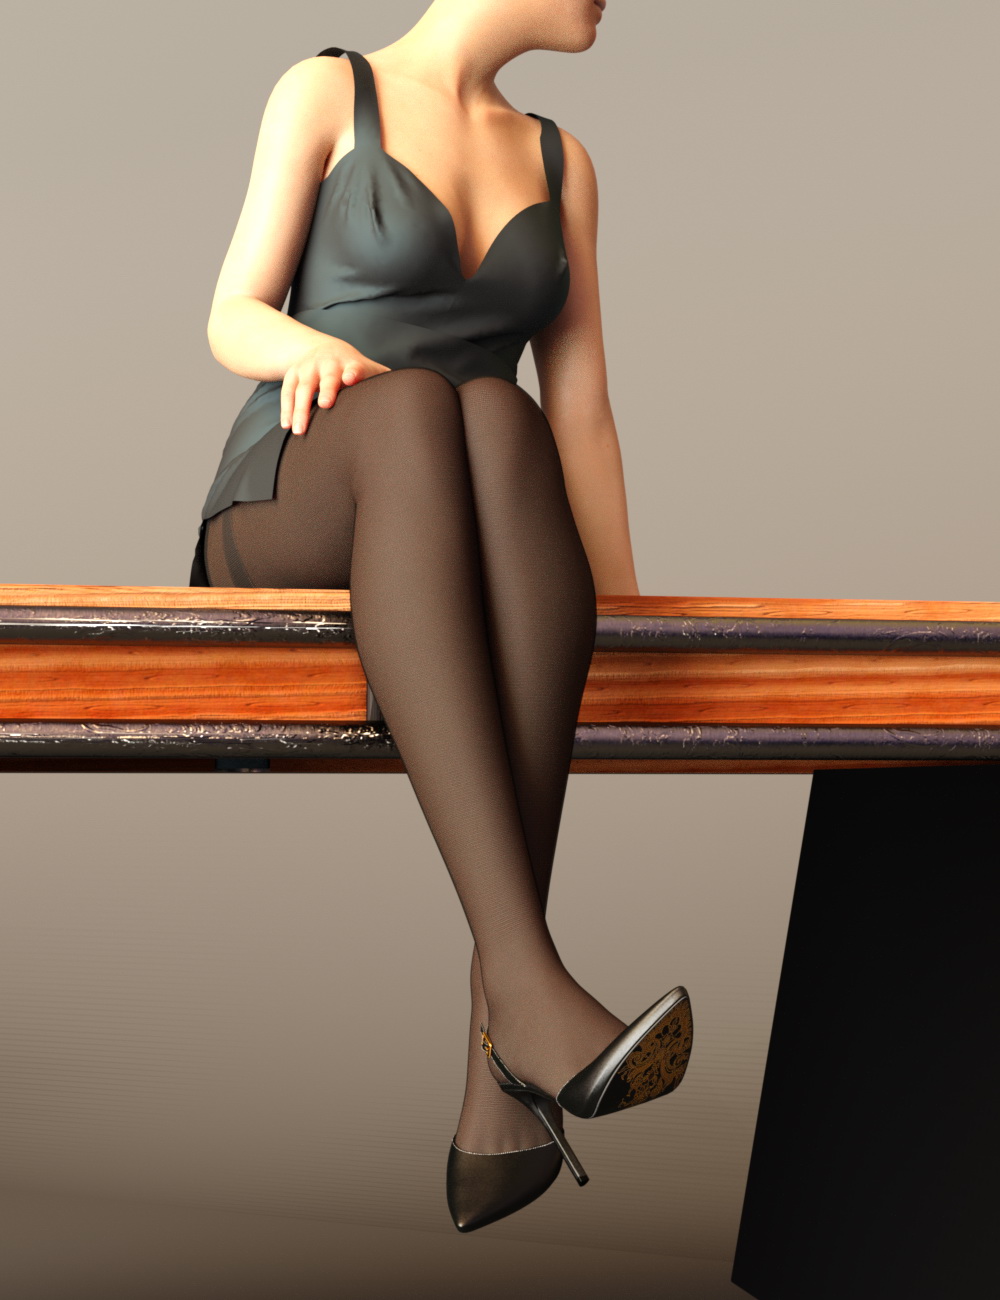 Anastasia Heel for Genesis 8 Female(s) by: chungdan, 3D Models by Daz 3D